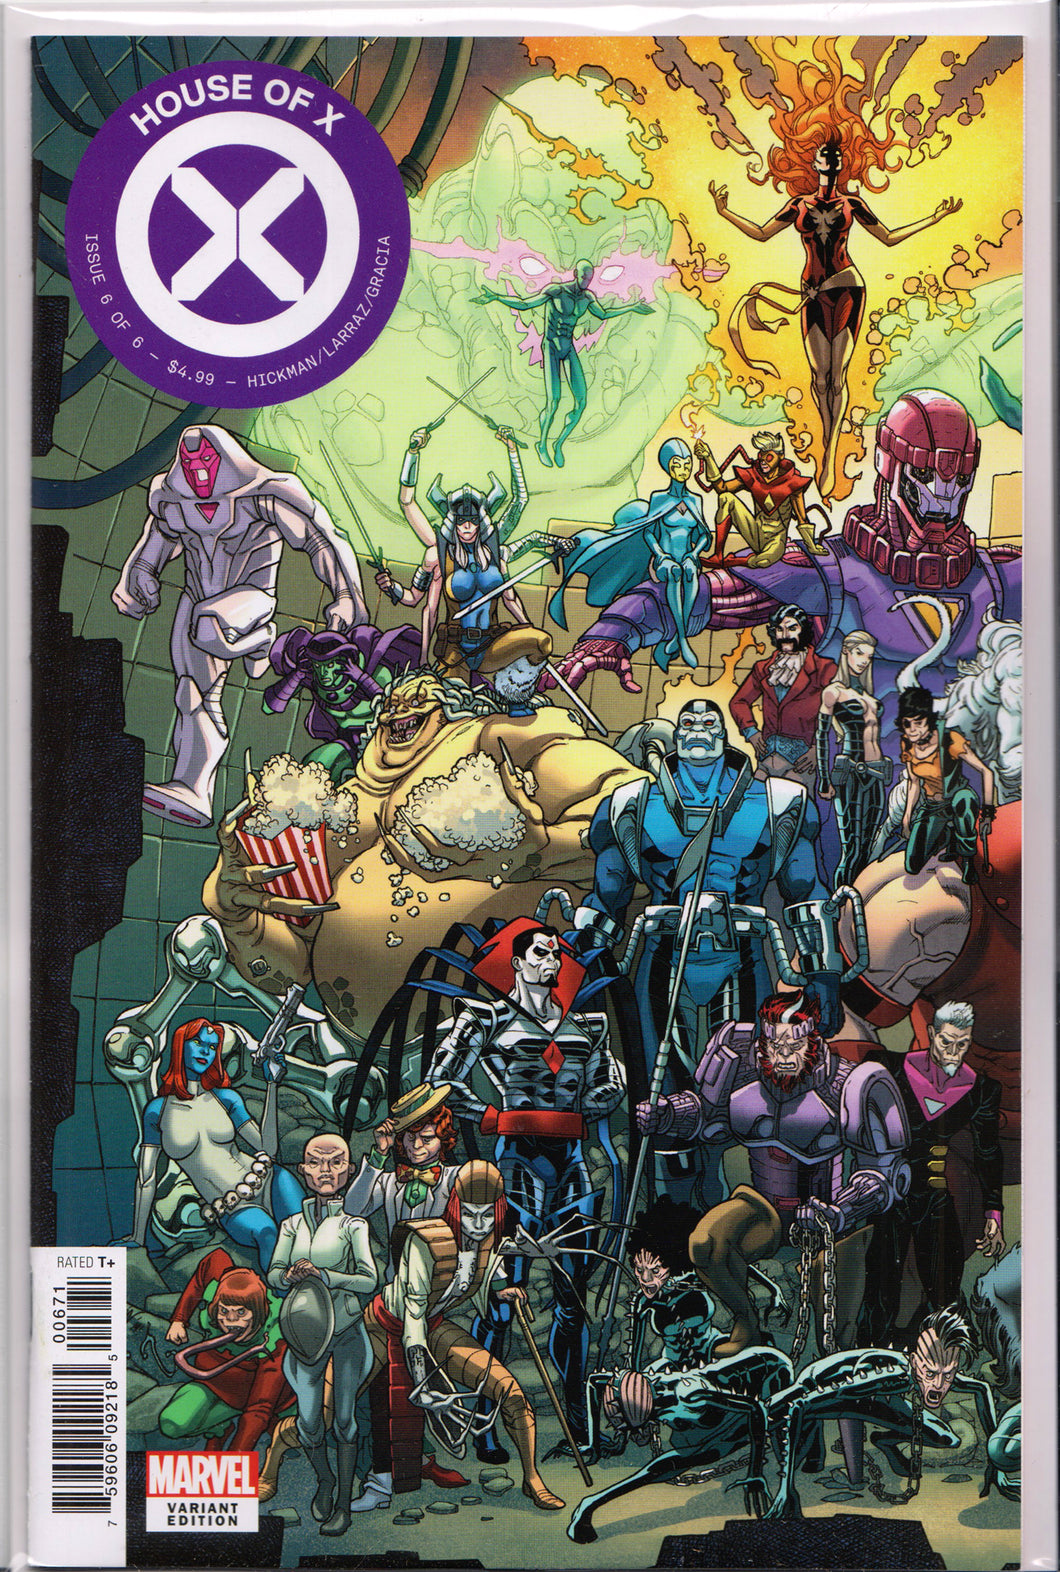 HOUSE OF X #6 (GARRON VARIANT) COMIC BOOK ~ Marvel Comics